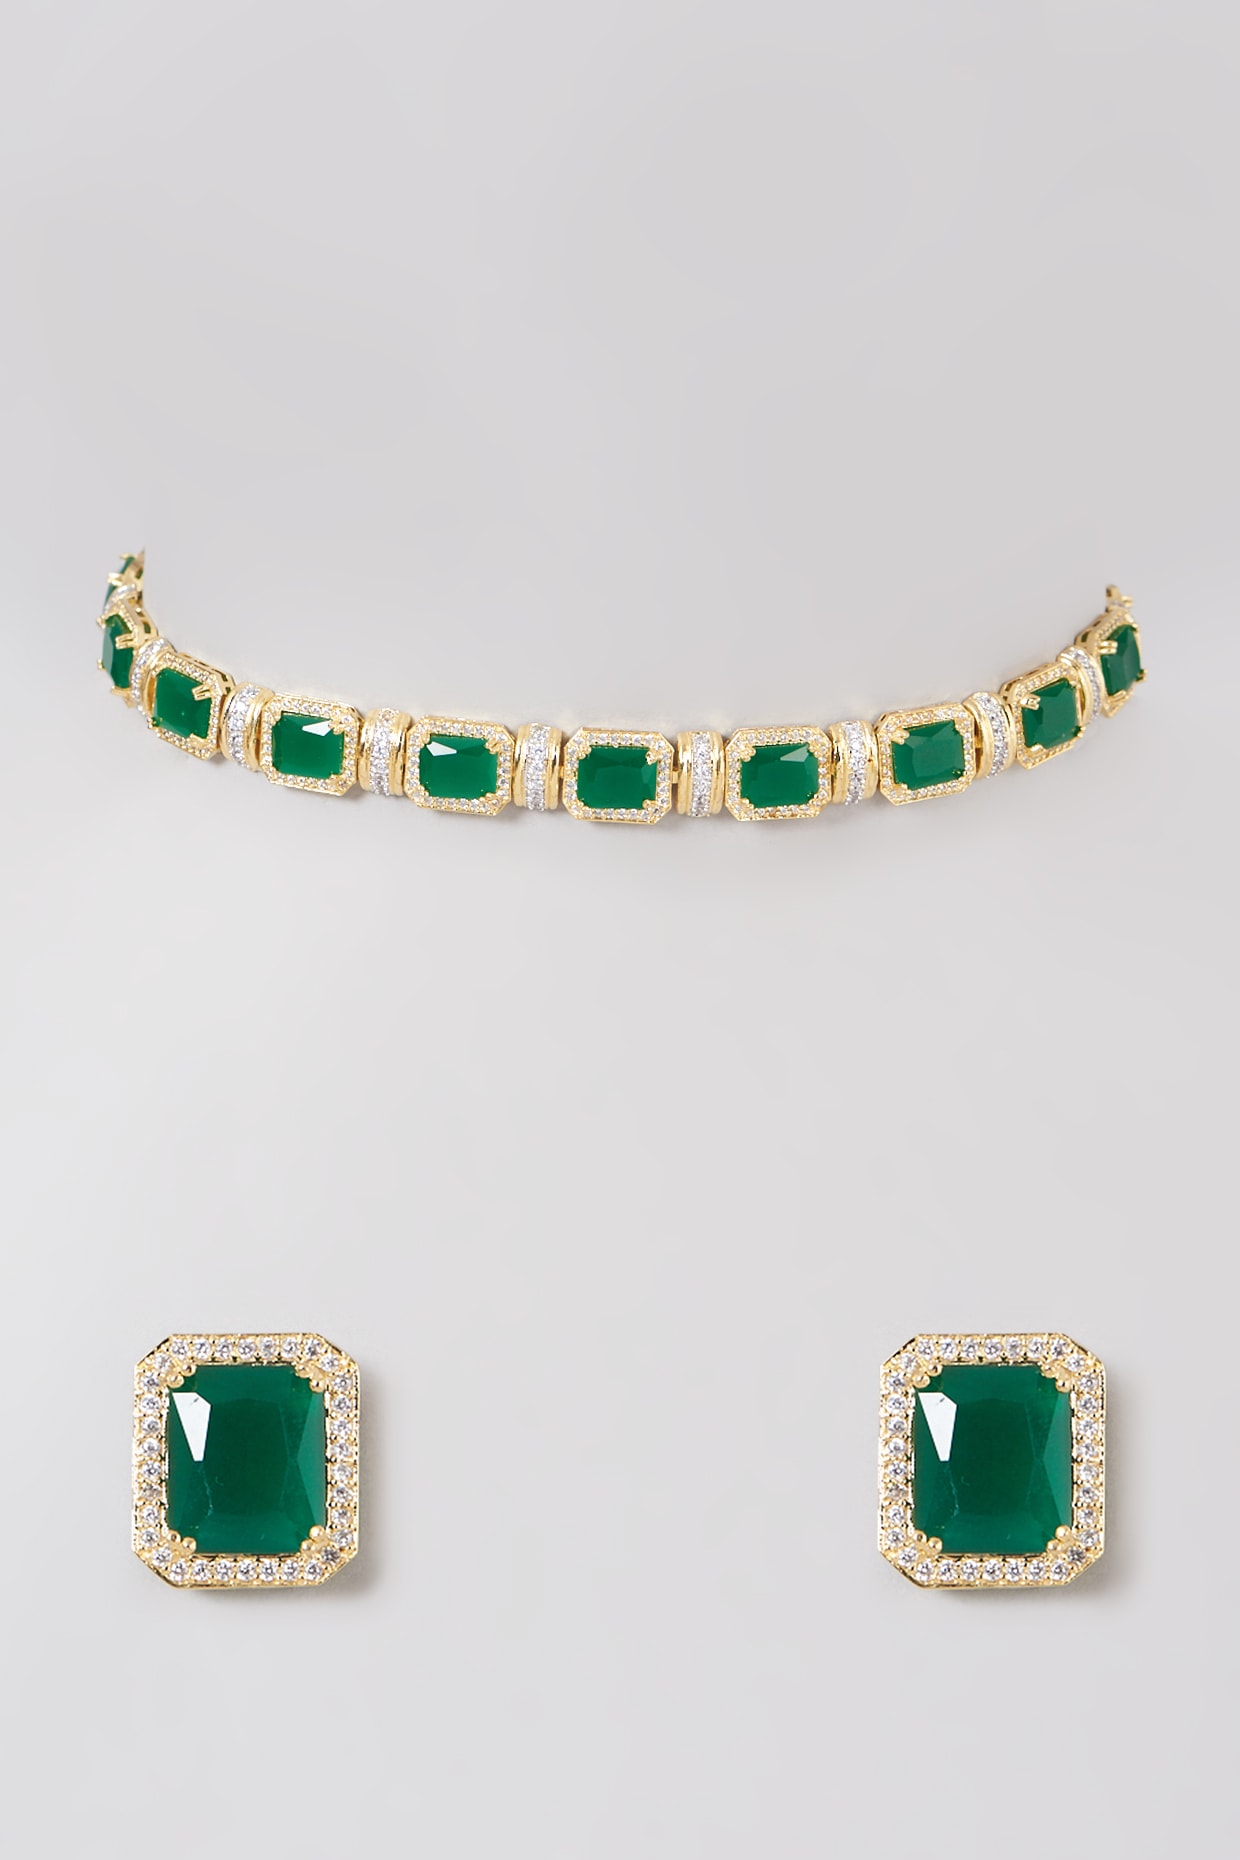 Green Jade Triangle Pendant in Sterling Silver Necklace - Vitality Triangle  | NOVICA